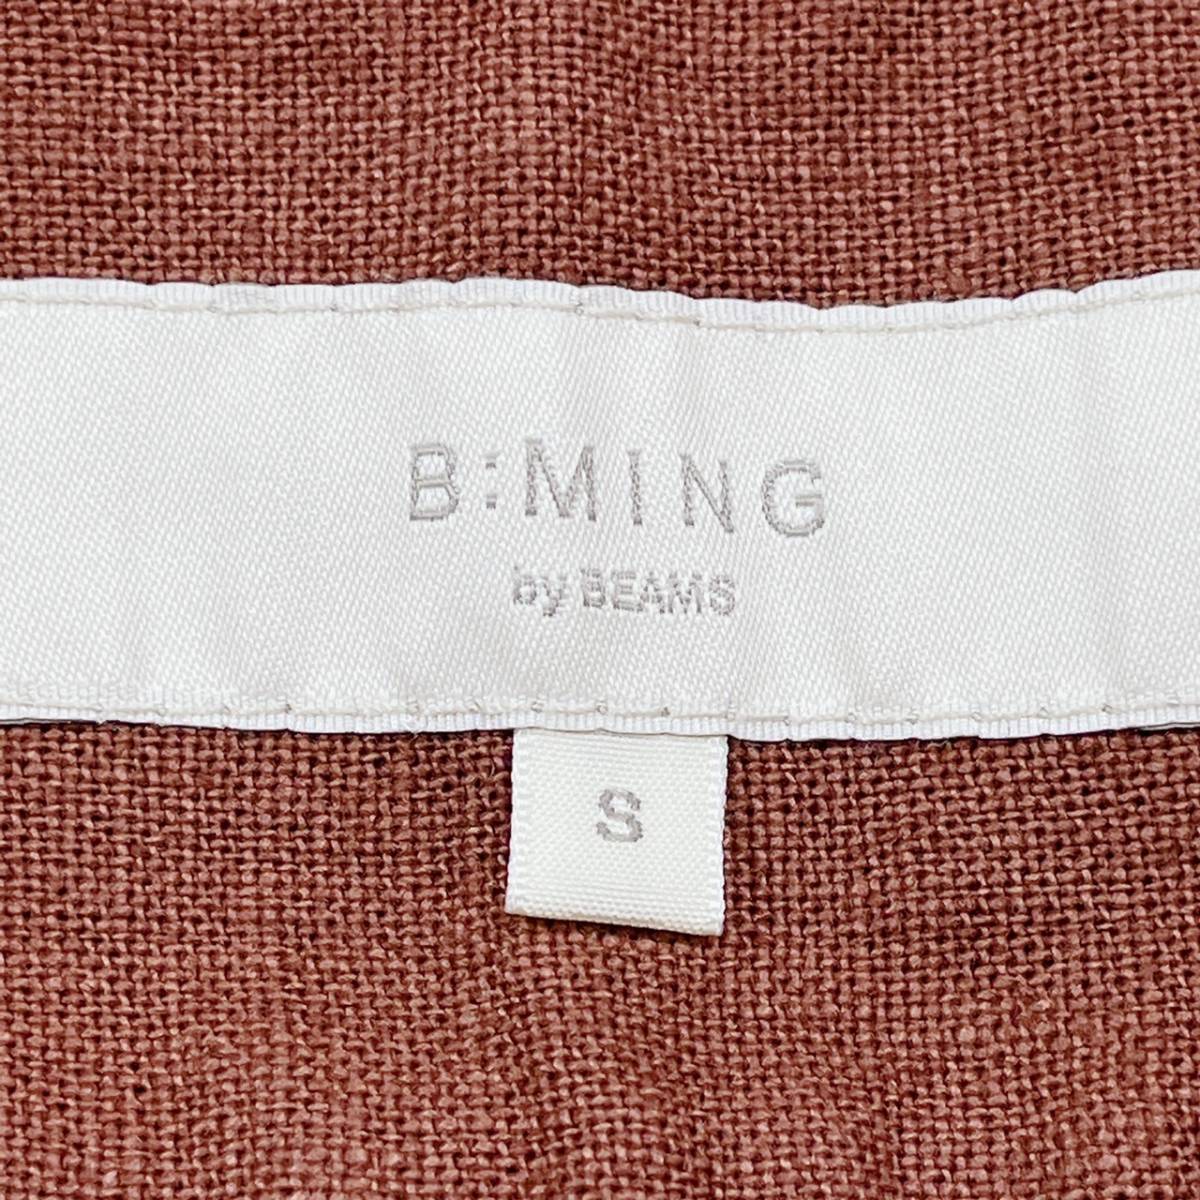 【20508】 B:MING by BEAMS ビーミング by ビームス ボトムス パンツ キュロットスカート ポケット ファスナー 飾りボタン ブラウン S